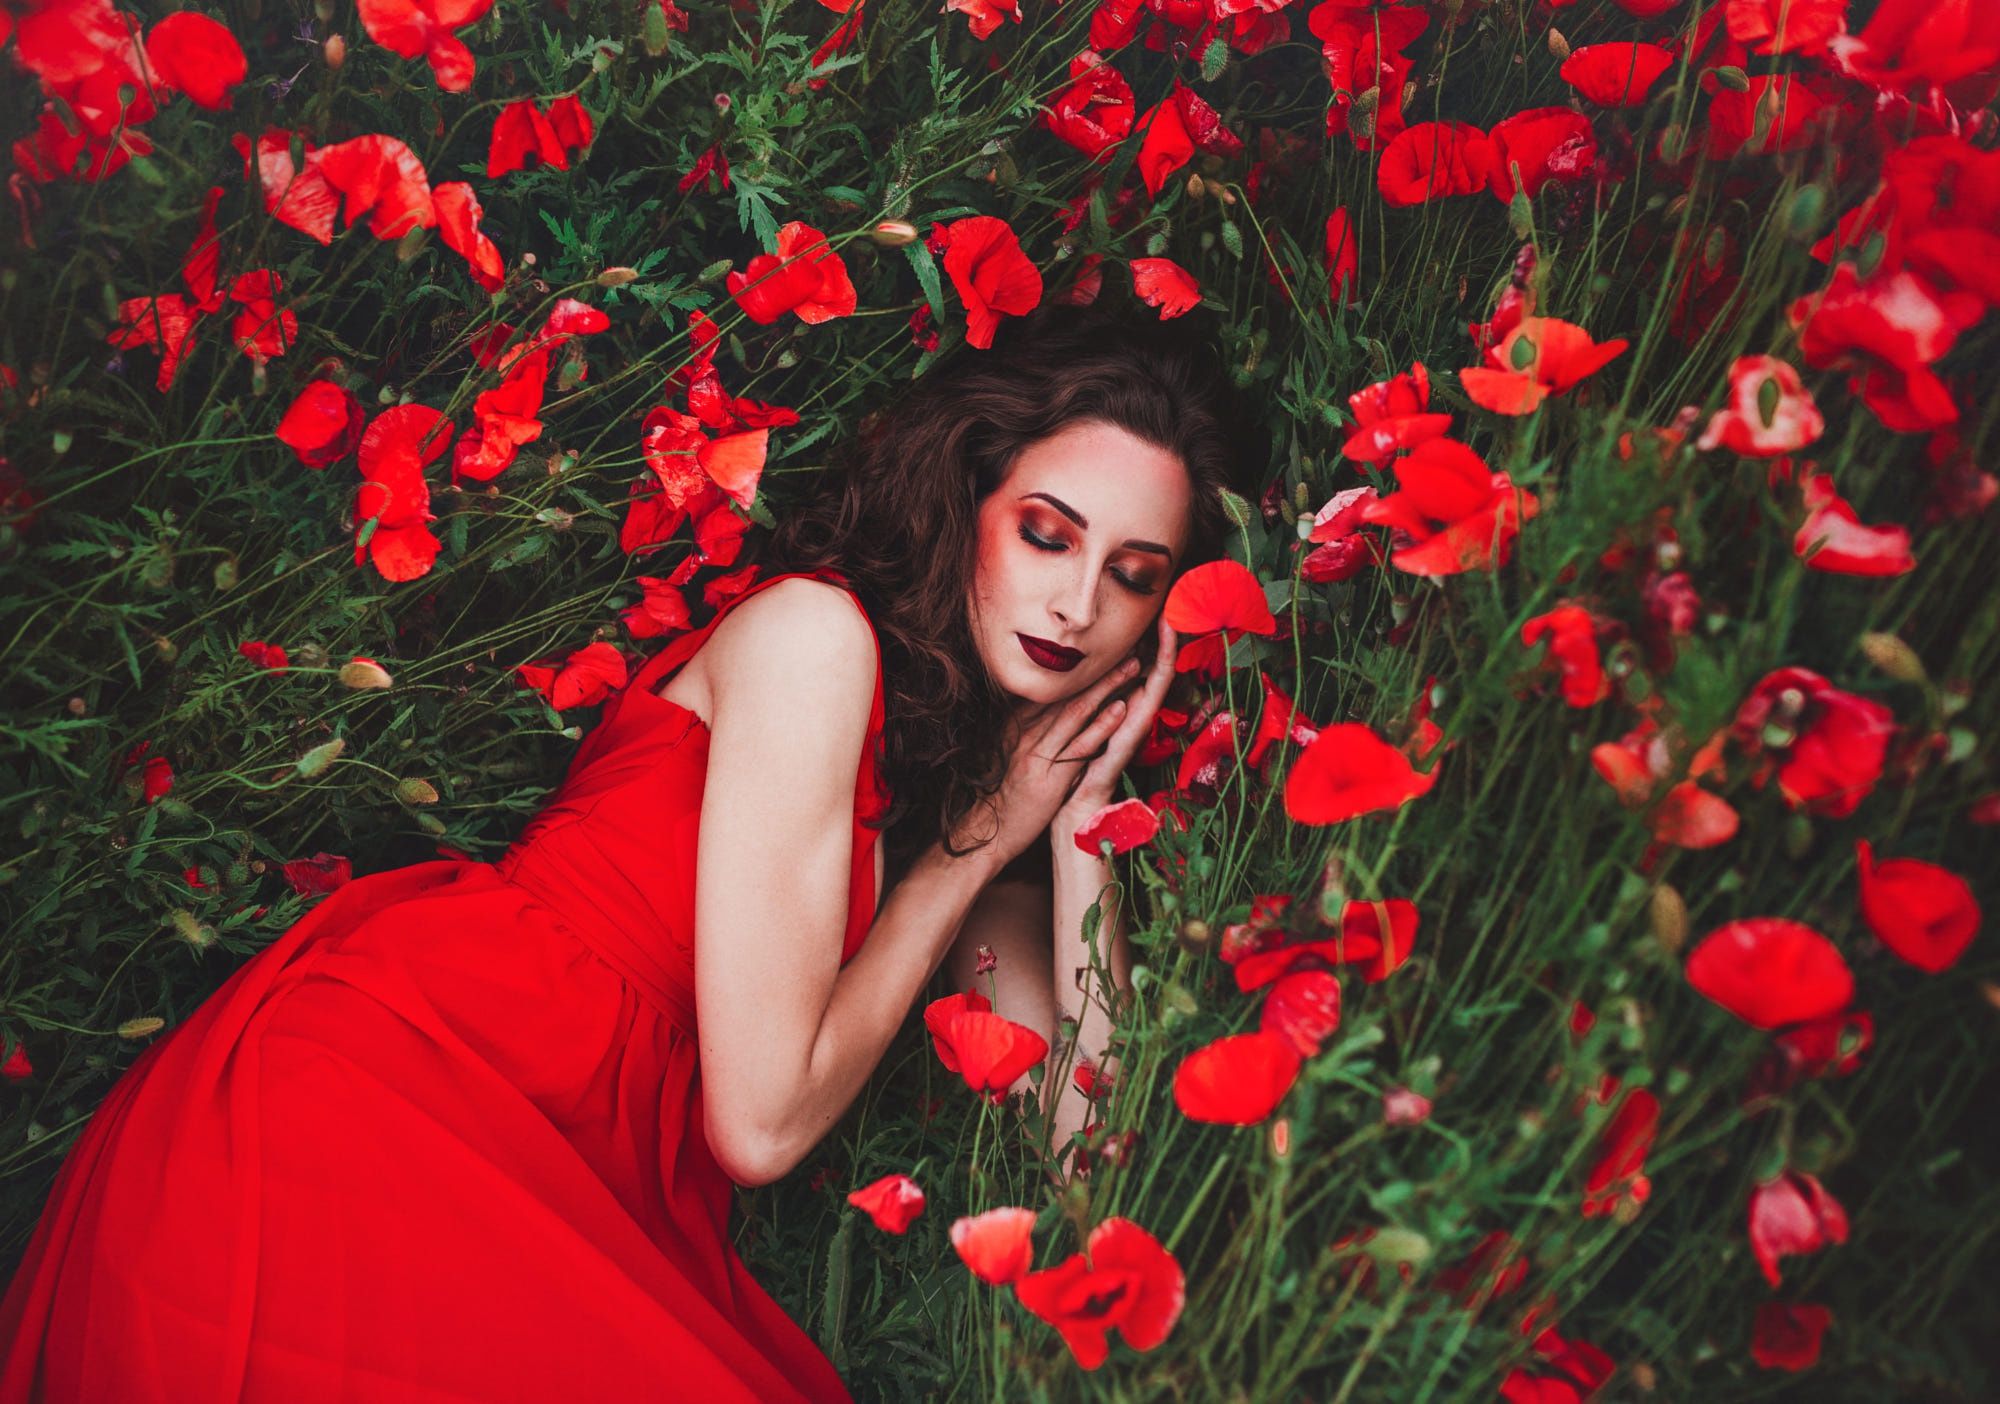 Women Mood Girl Flower Sleeping Red Dress Poppy Woman Model Black Hair Lipstick Red Flower HD Wallpaper Background Image